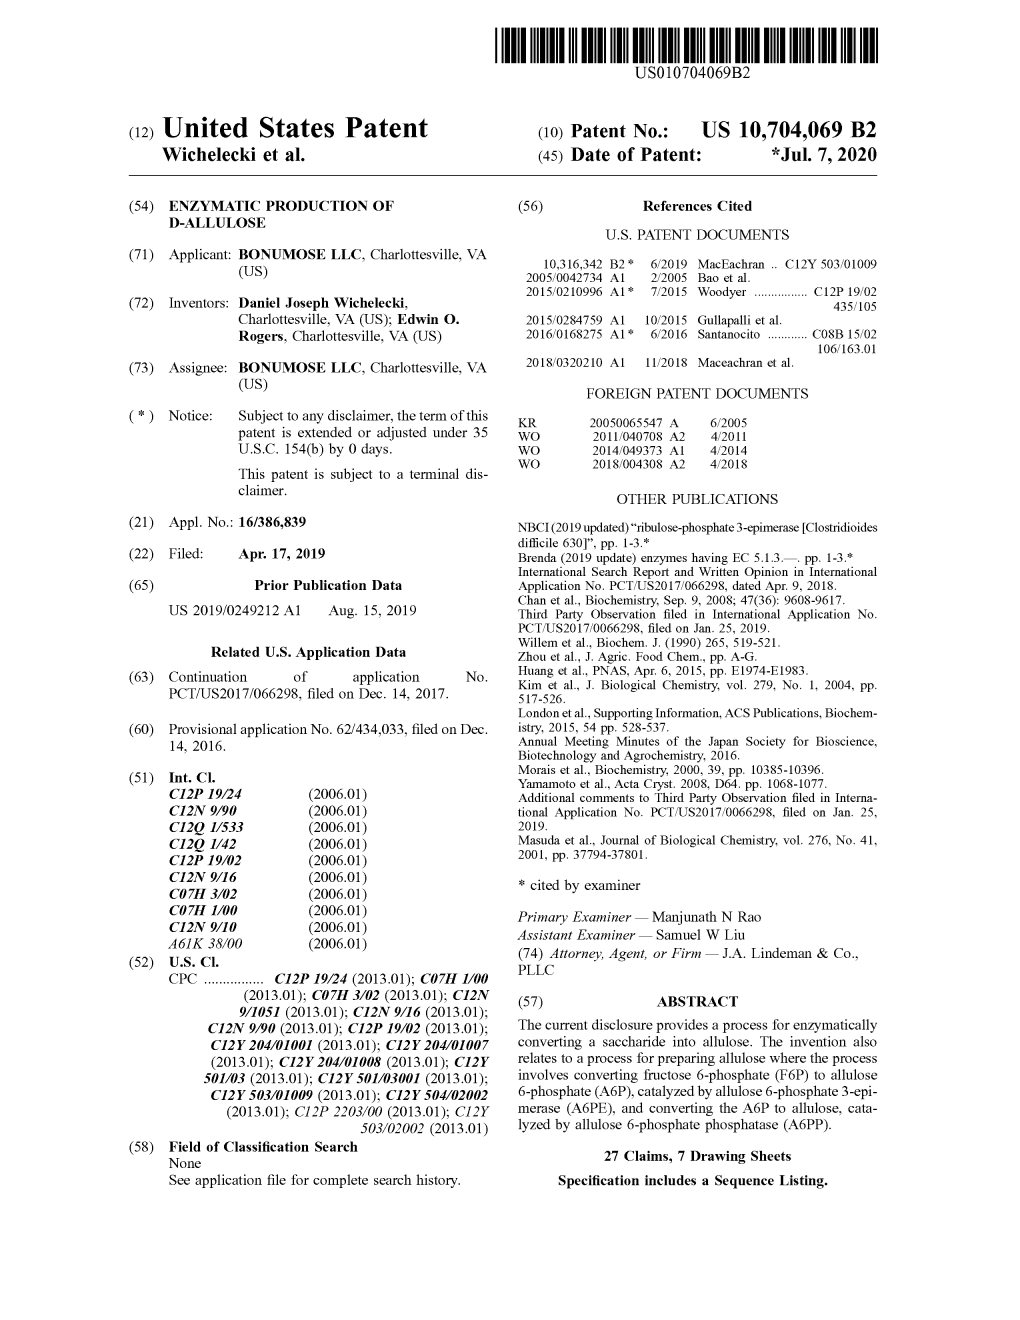 ( 12 ) United States Patent (10 ) Patent No.: US 10,704,069 B2 Wichelecki Et Al